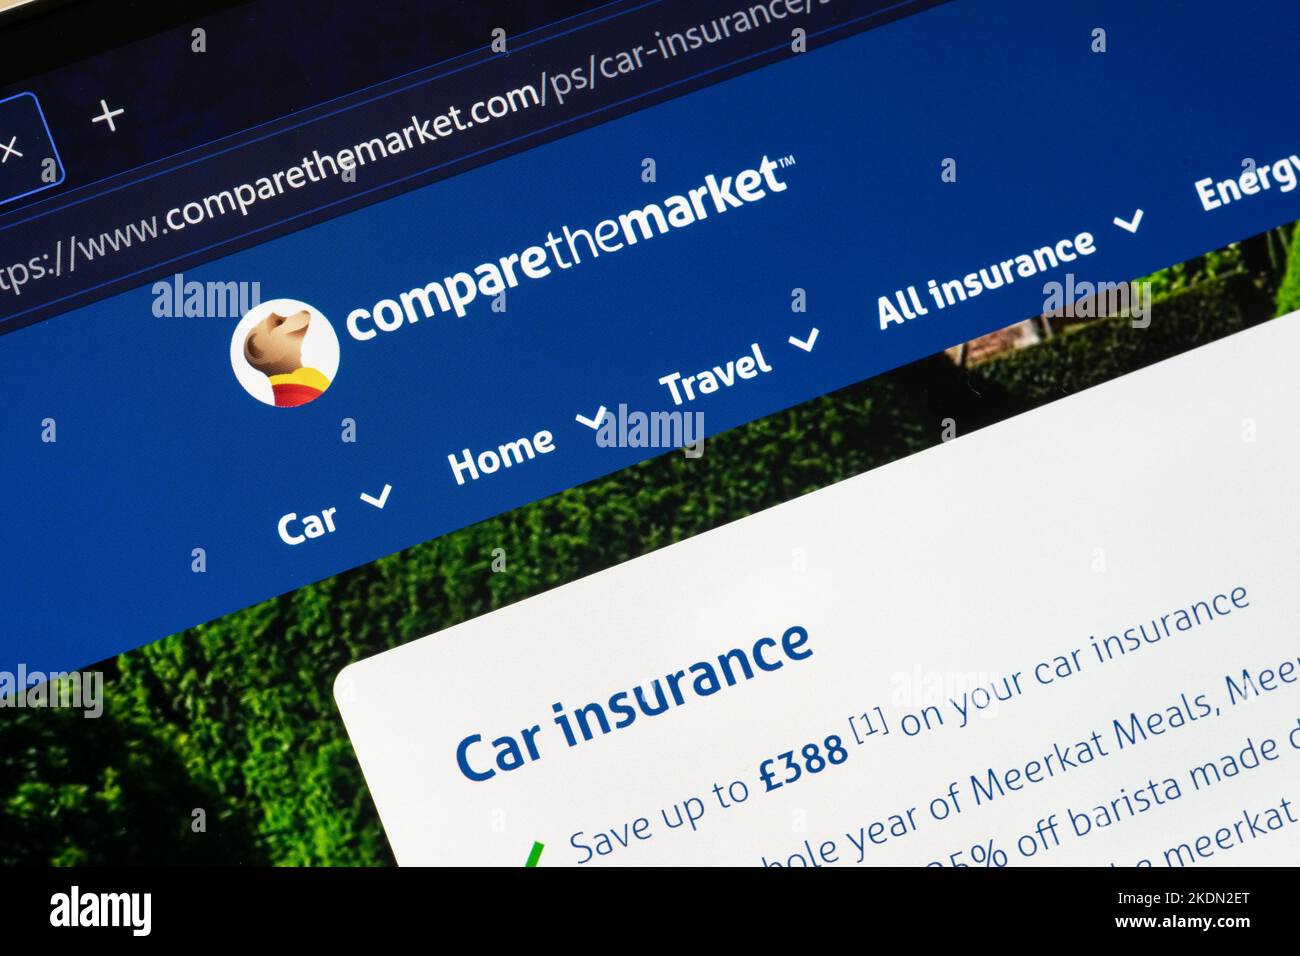 Car Insurance Uk Compare Market 